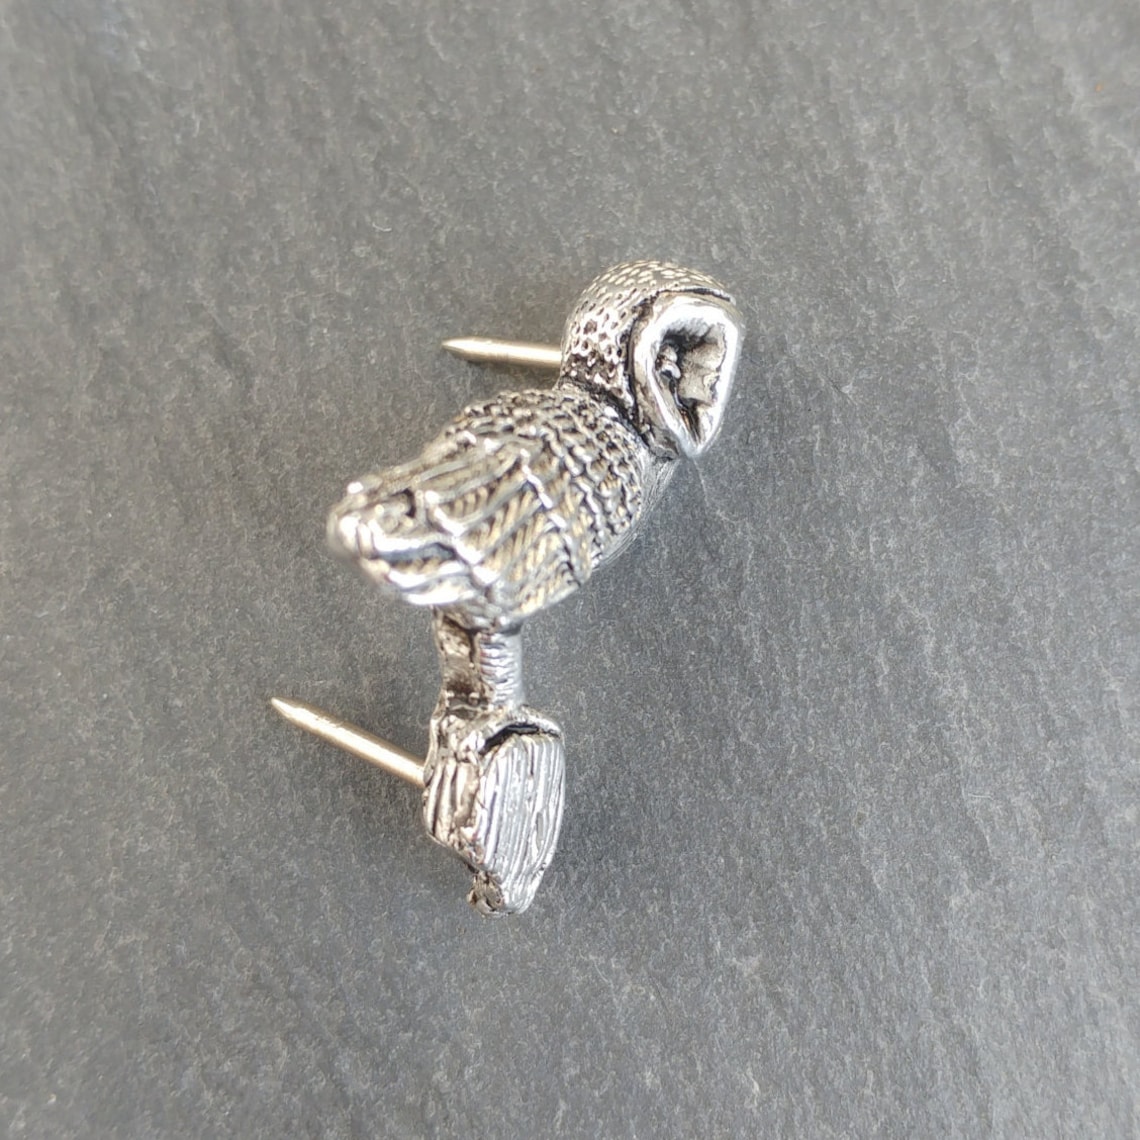 Barn Owl Brooch Lapel Pin Tie Pin Pins Tack Owl Jewelry Etsy Uk